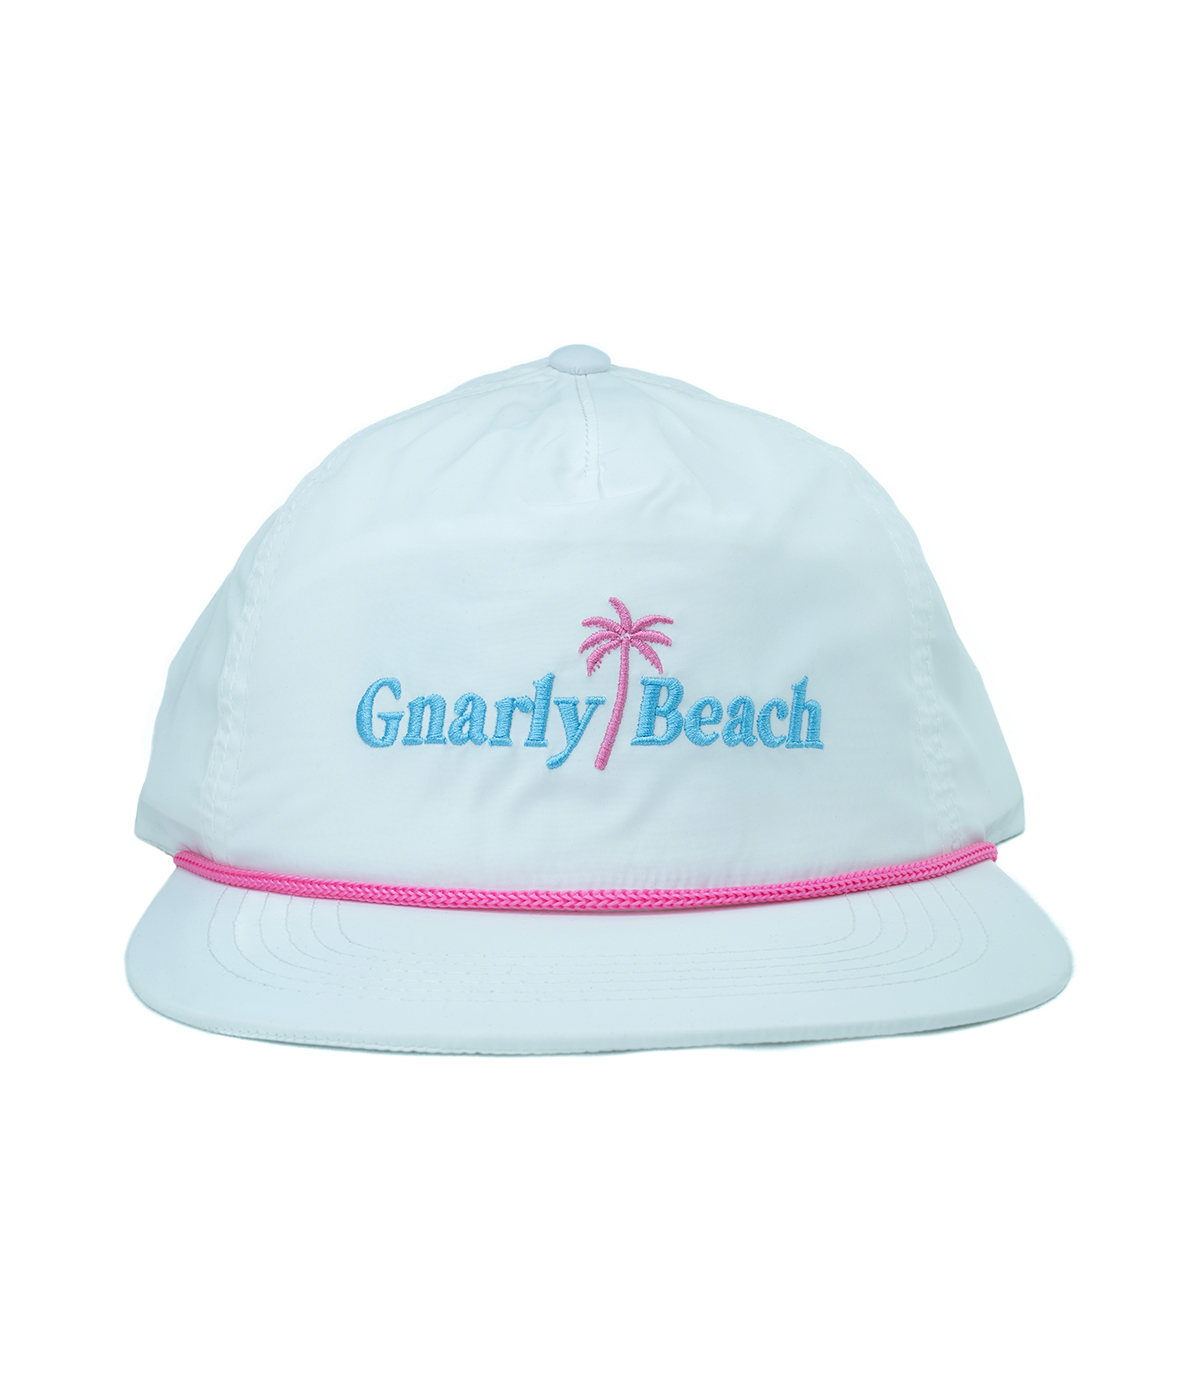 gnarly beach, gnarlybeach.com, gnarly beach malibu hat, neon beach hat, gnarly beach brand, josh lunt, @joshlunt, lifestyle brands, @lifestylebrands.co, neon beach hat